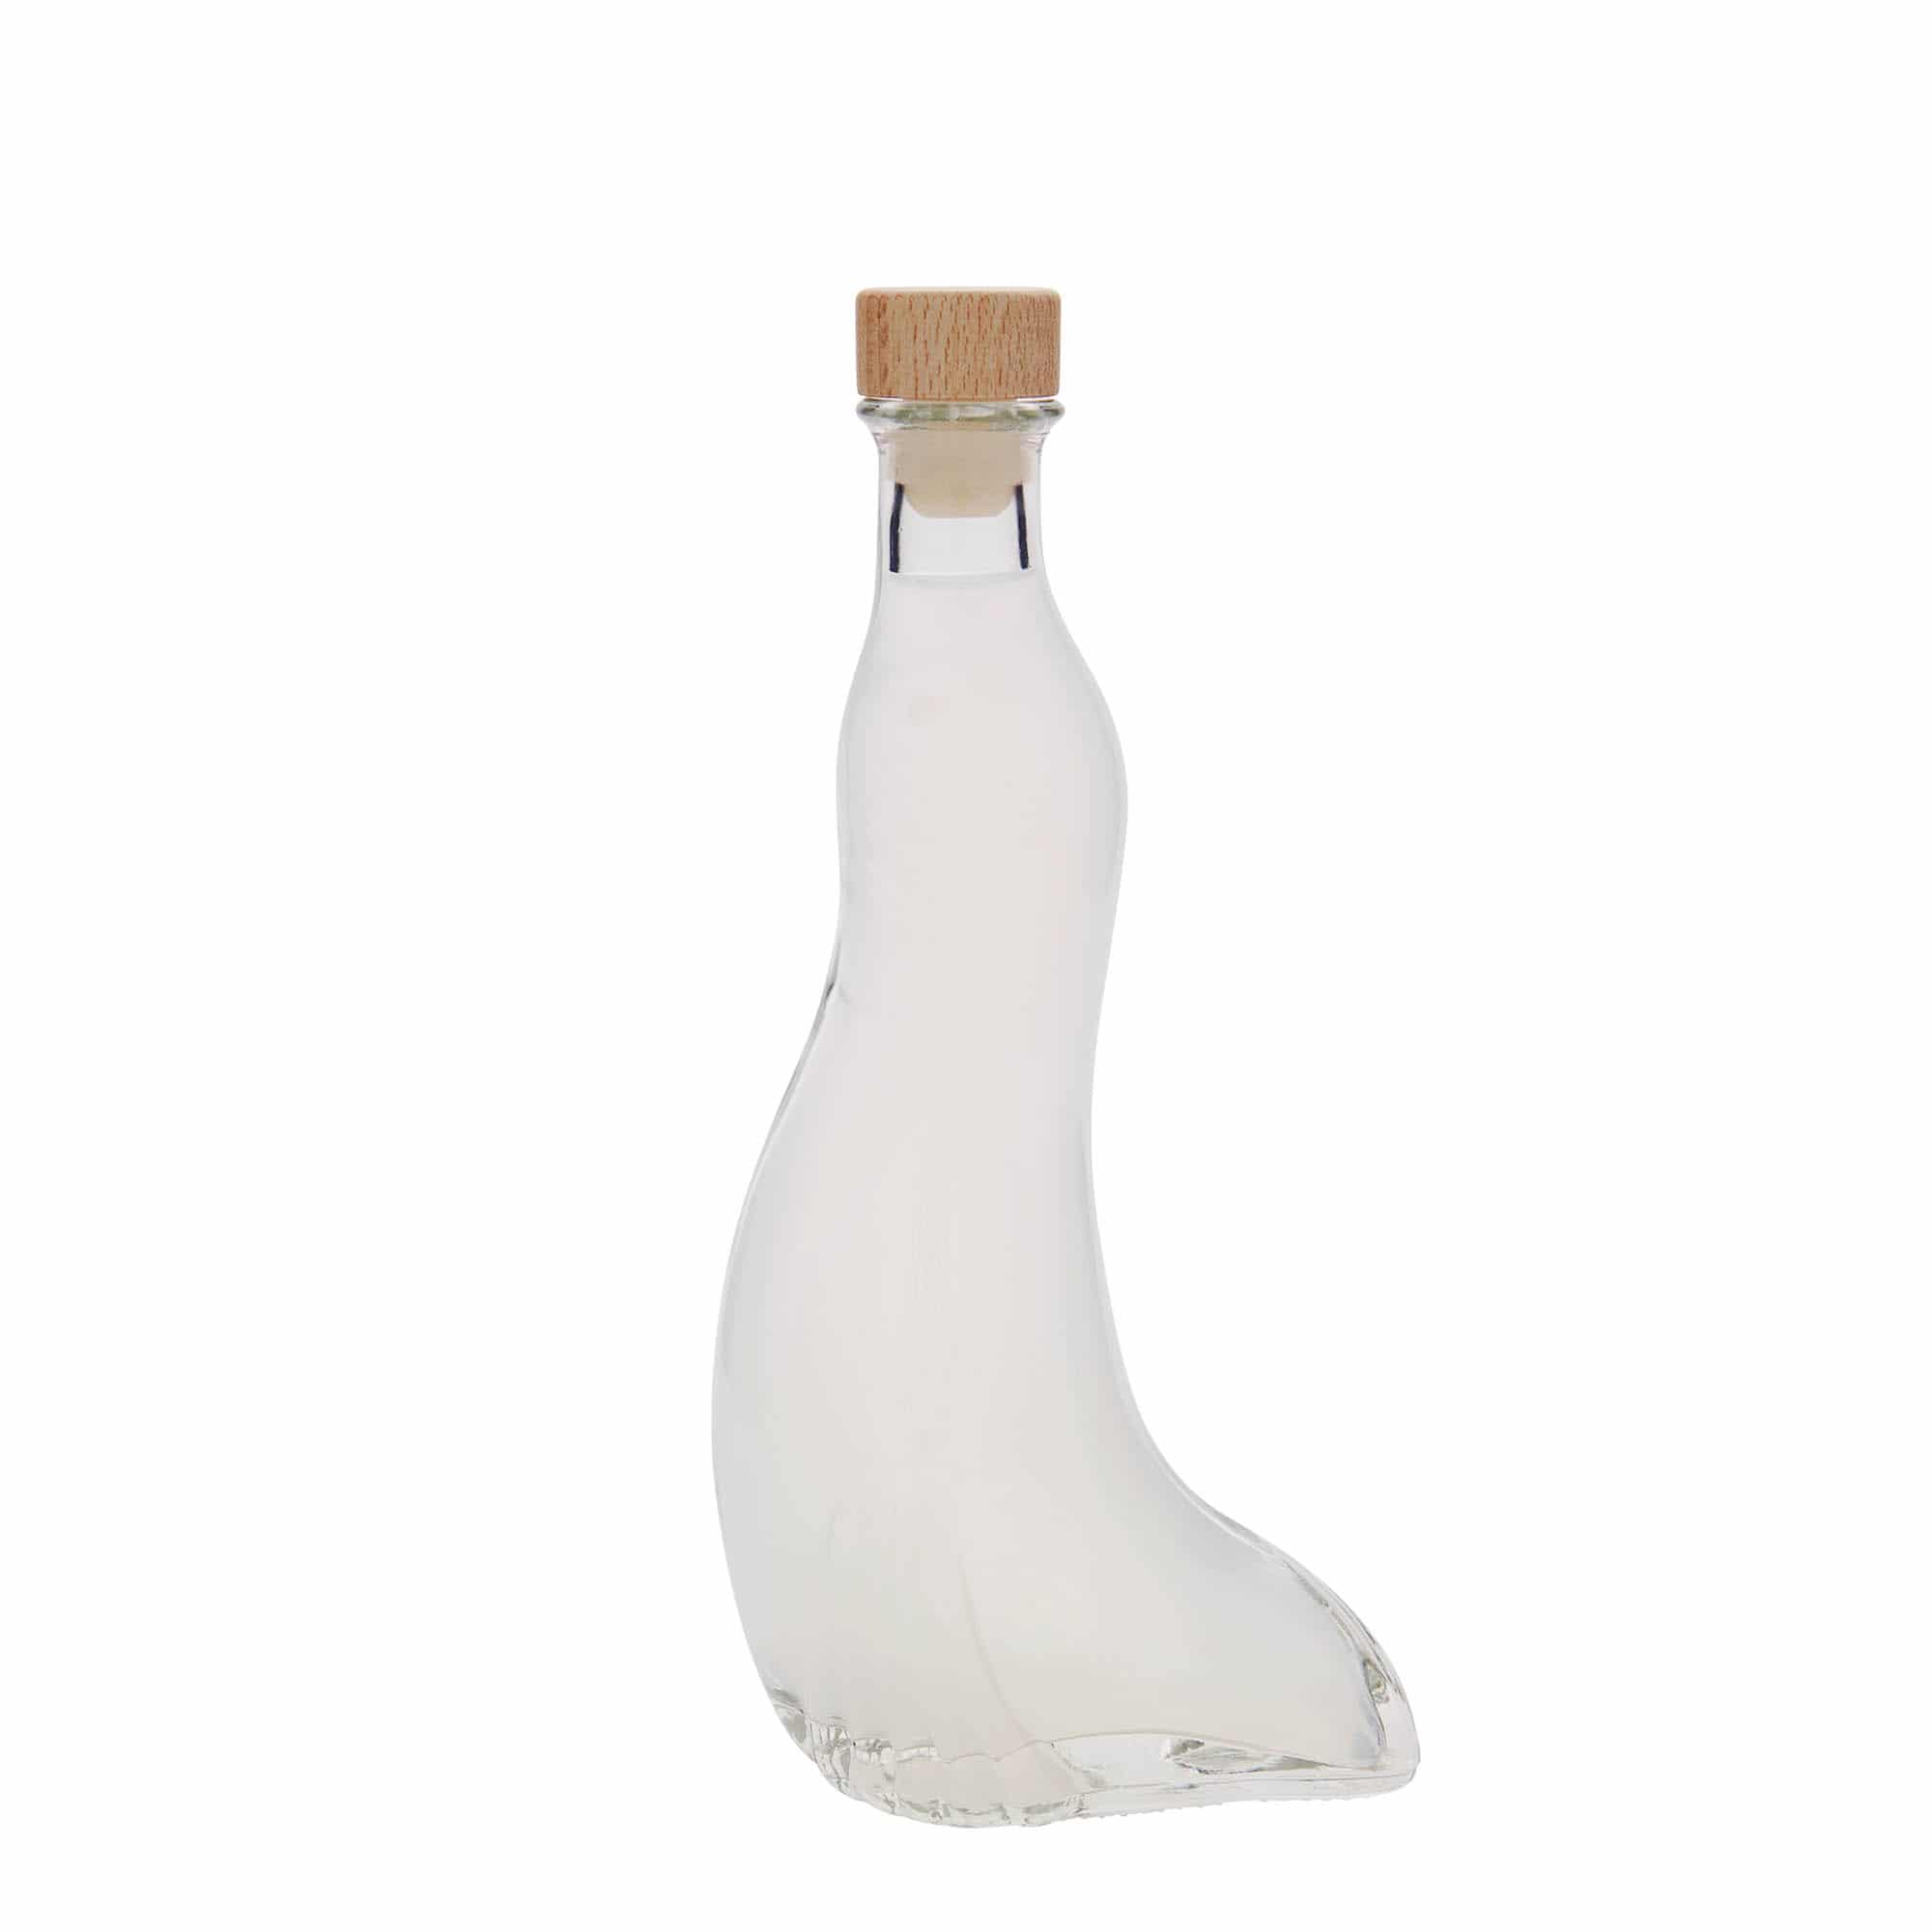 Skleněná lahev 200 ml 'Tuleň', uzávěr: korek